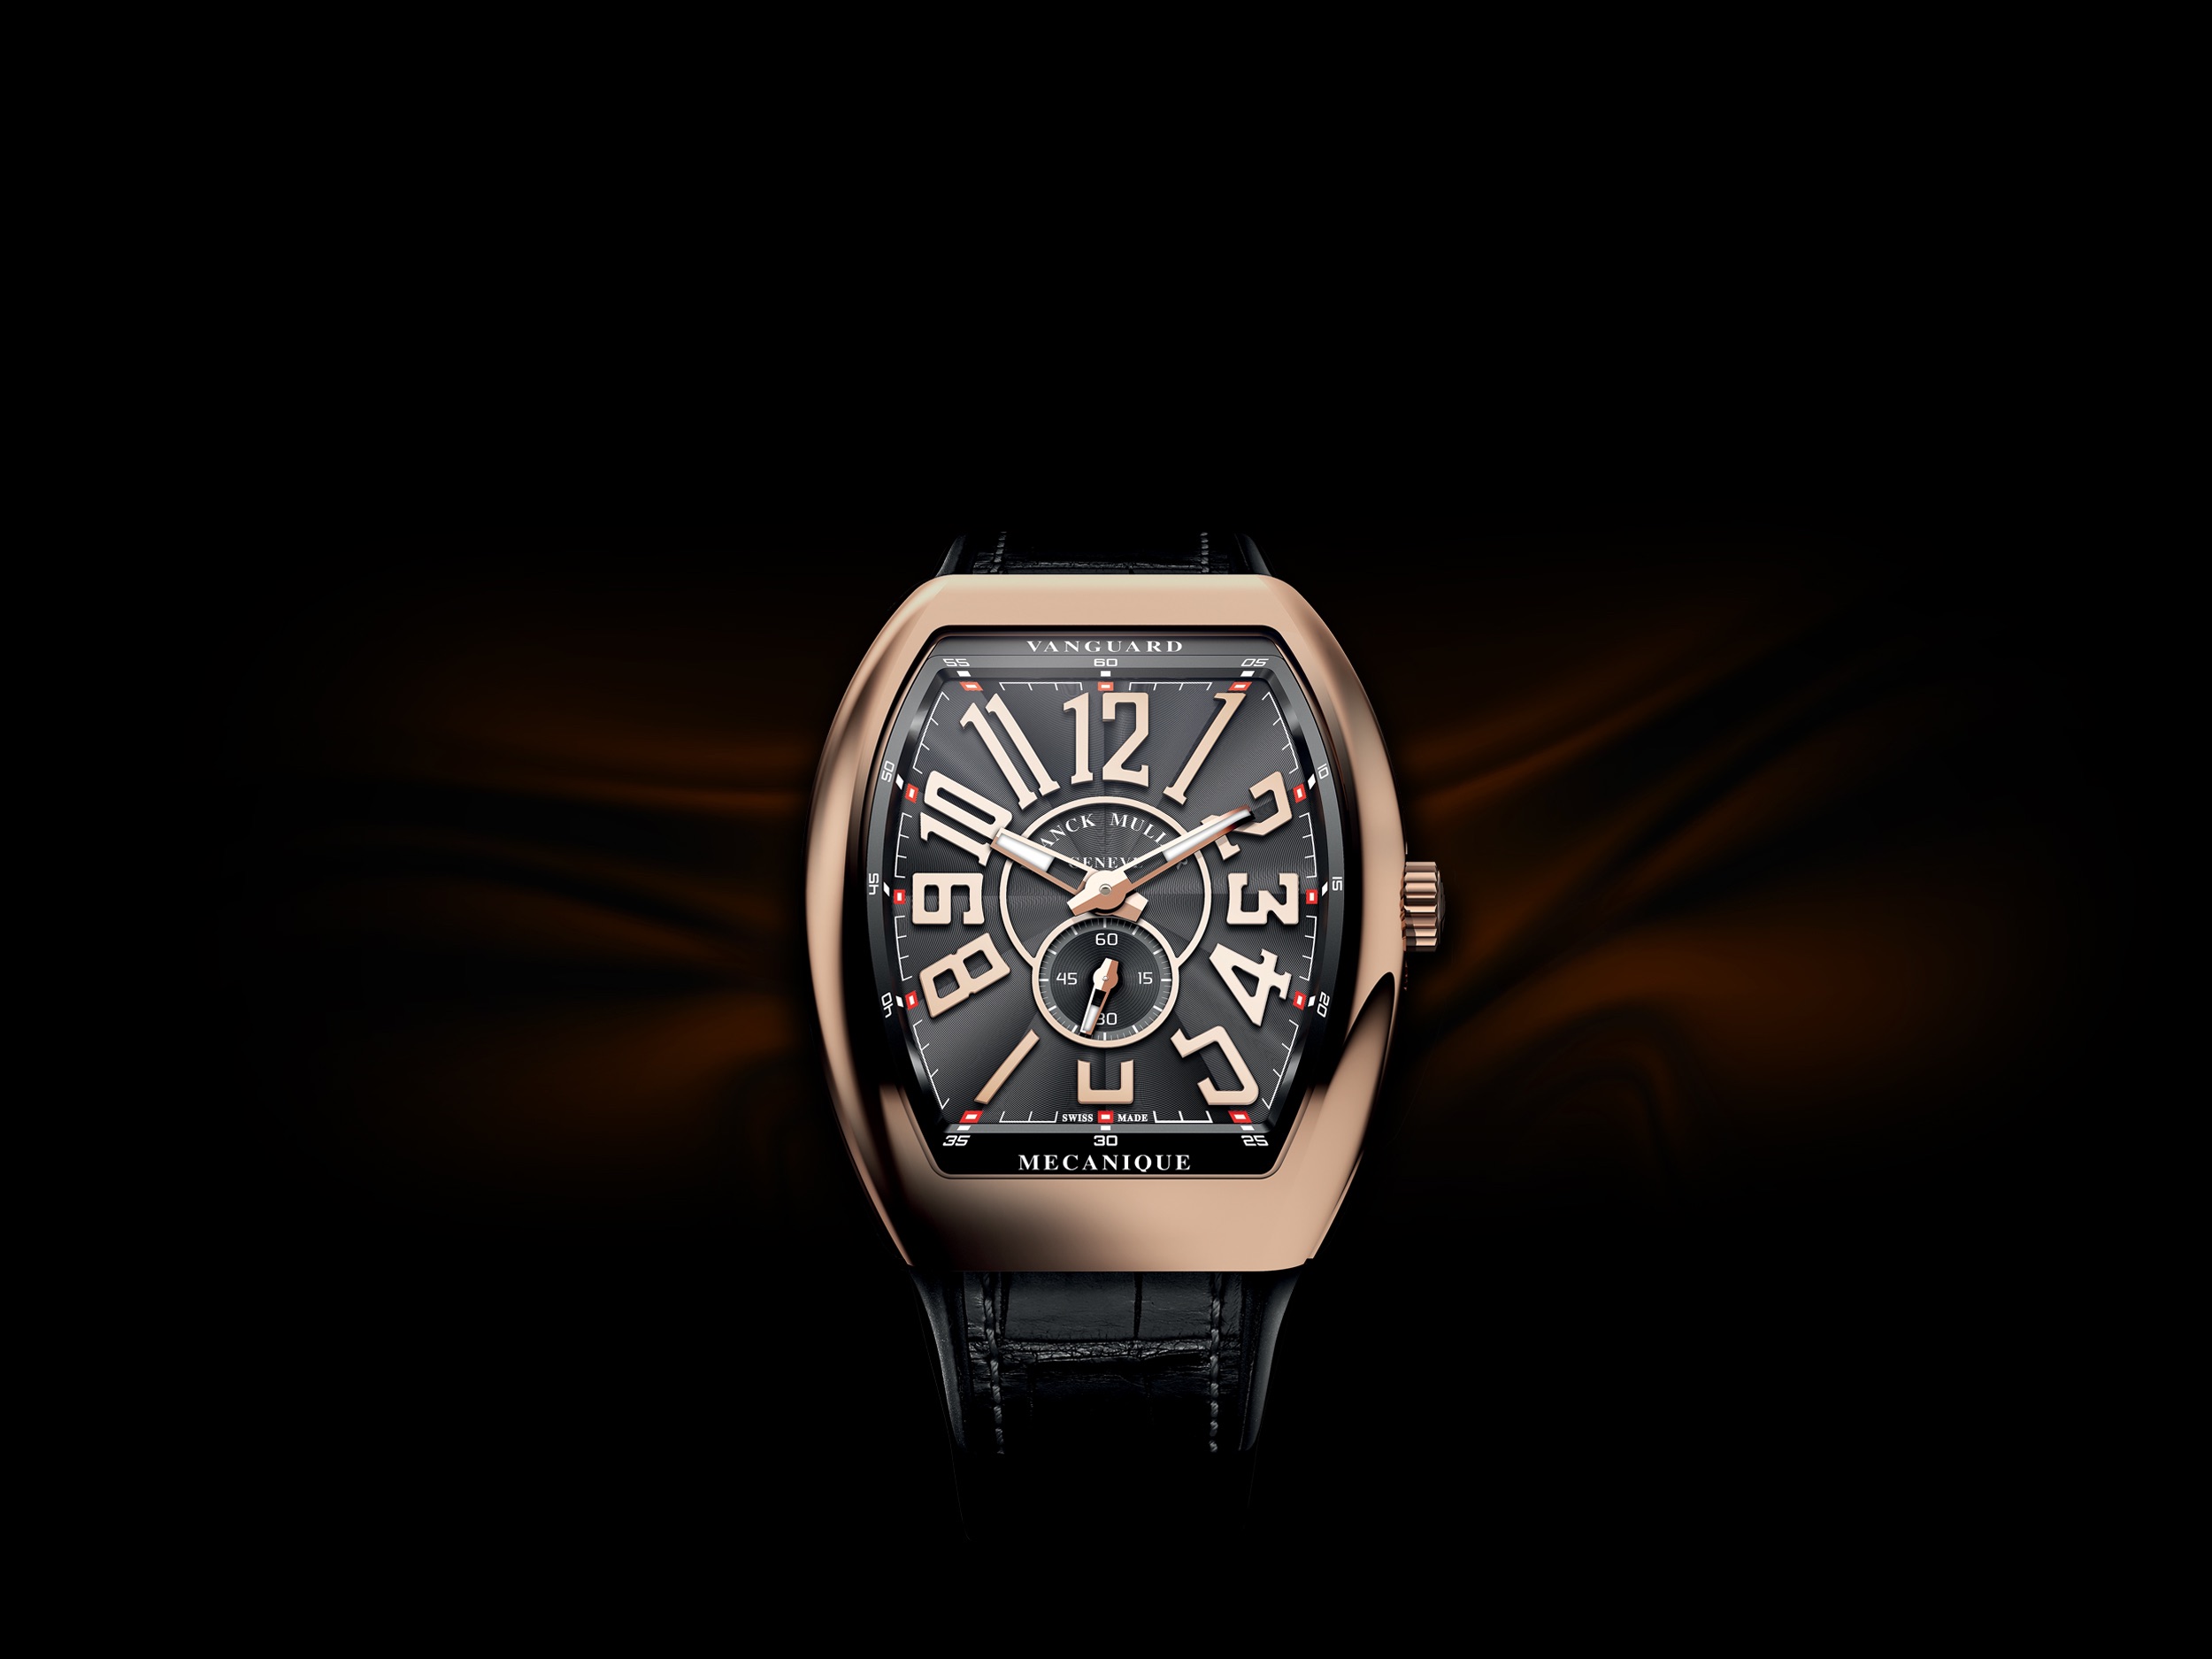 Cartier Replica Watches Ebay